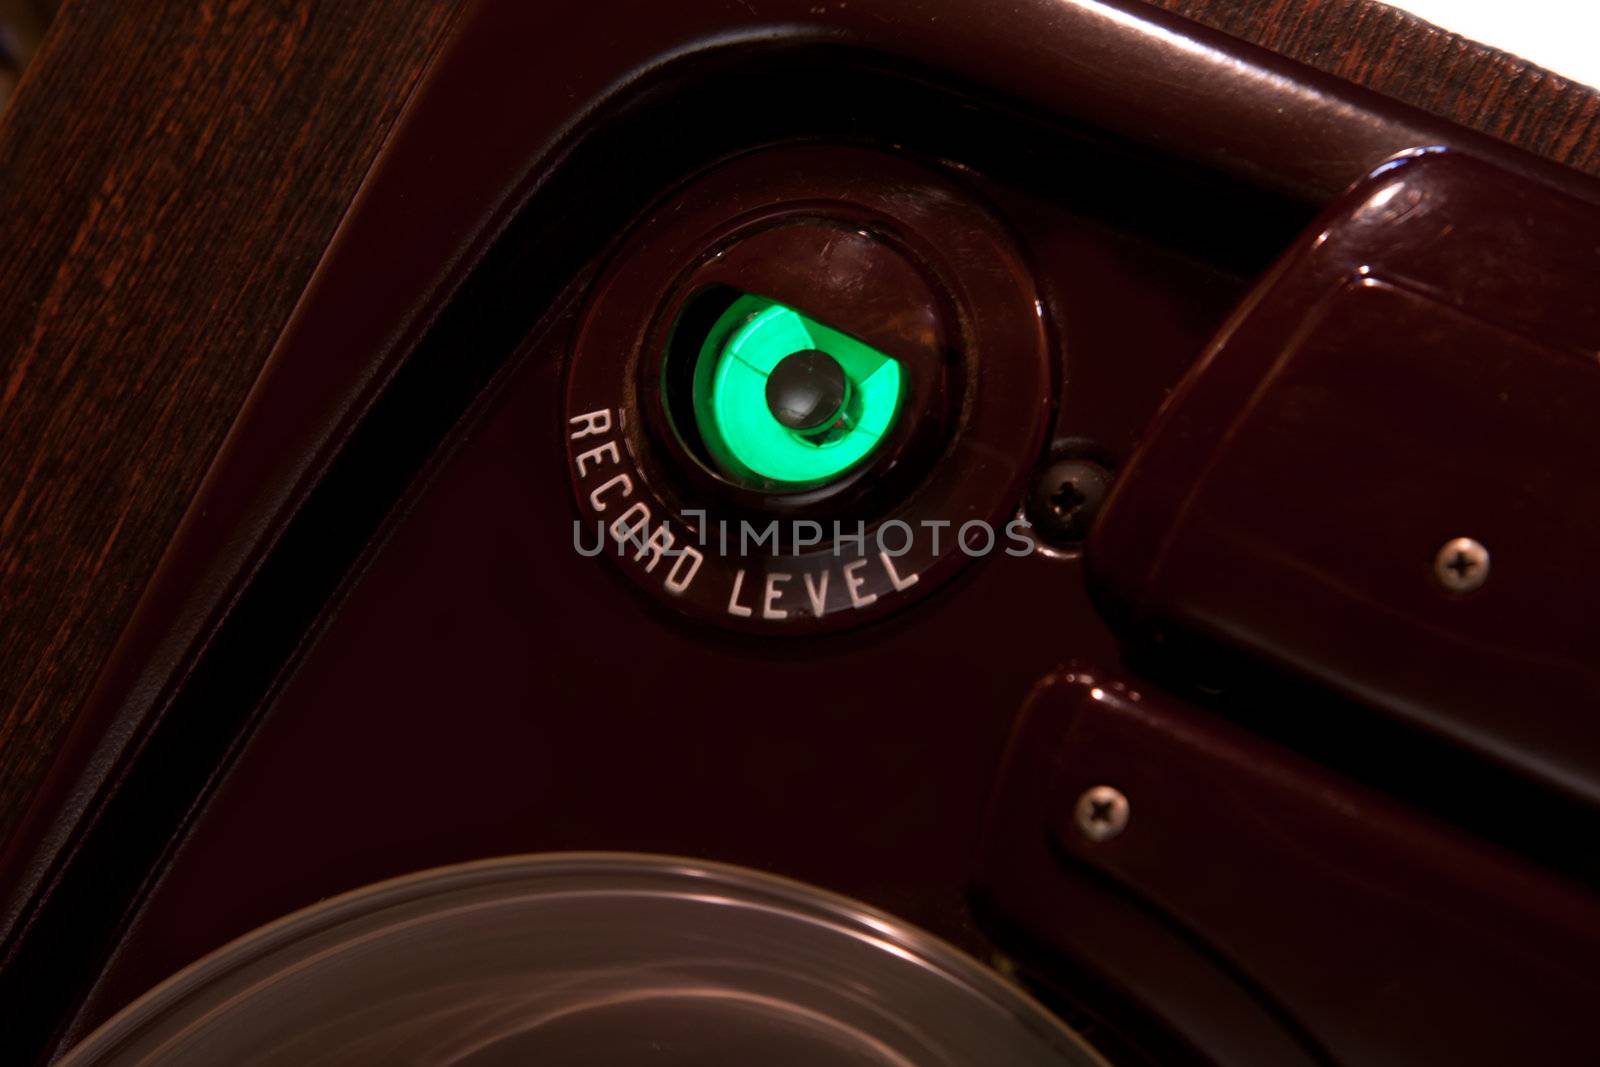 Tube green magic eye record level meter by GunterNezhoda